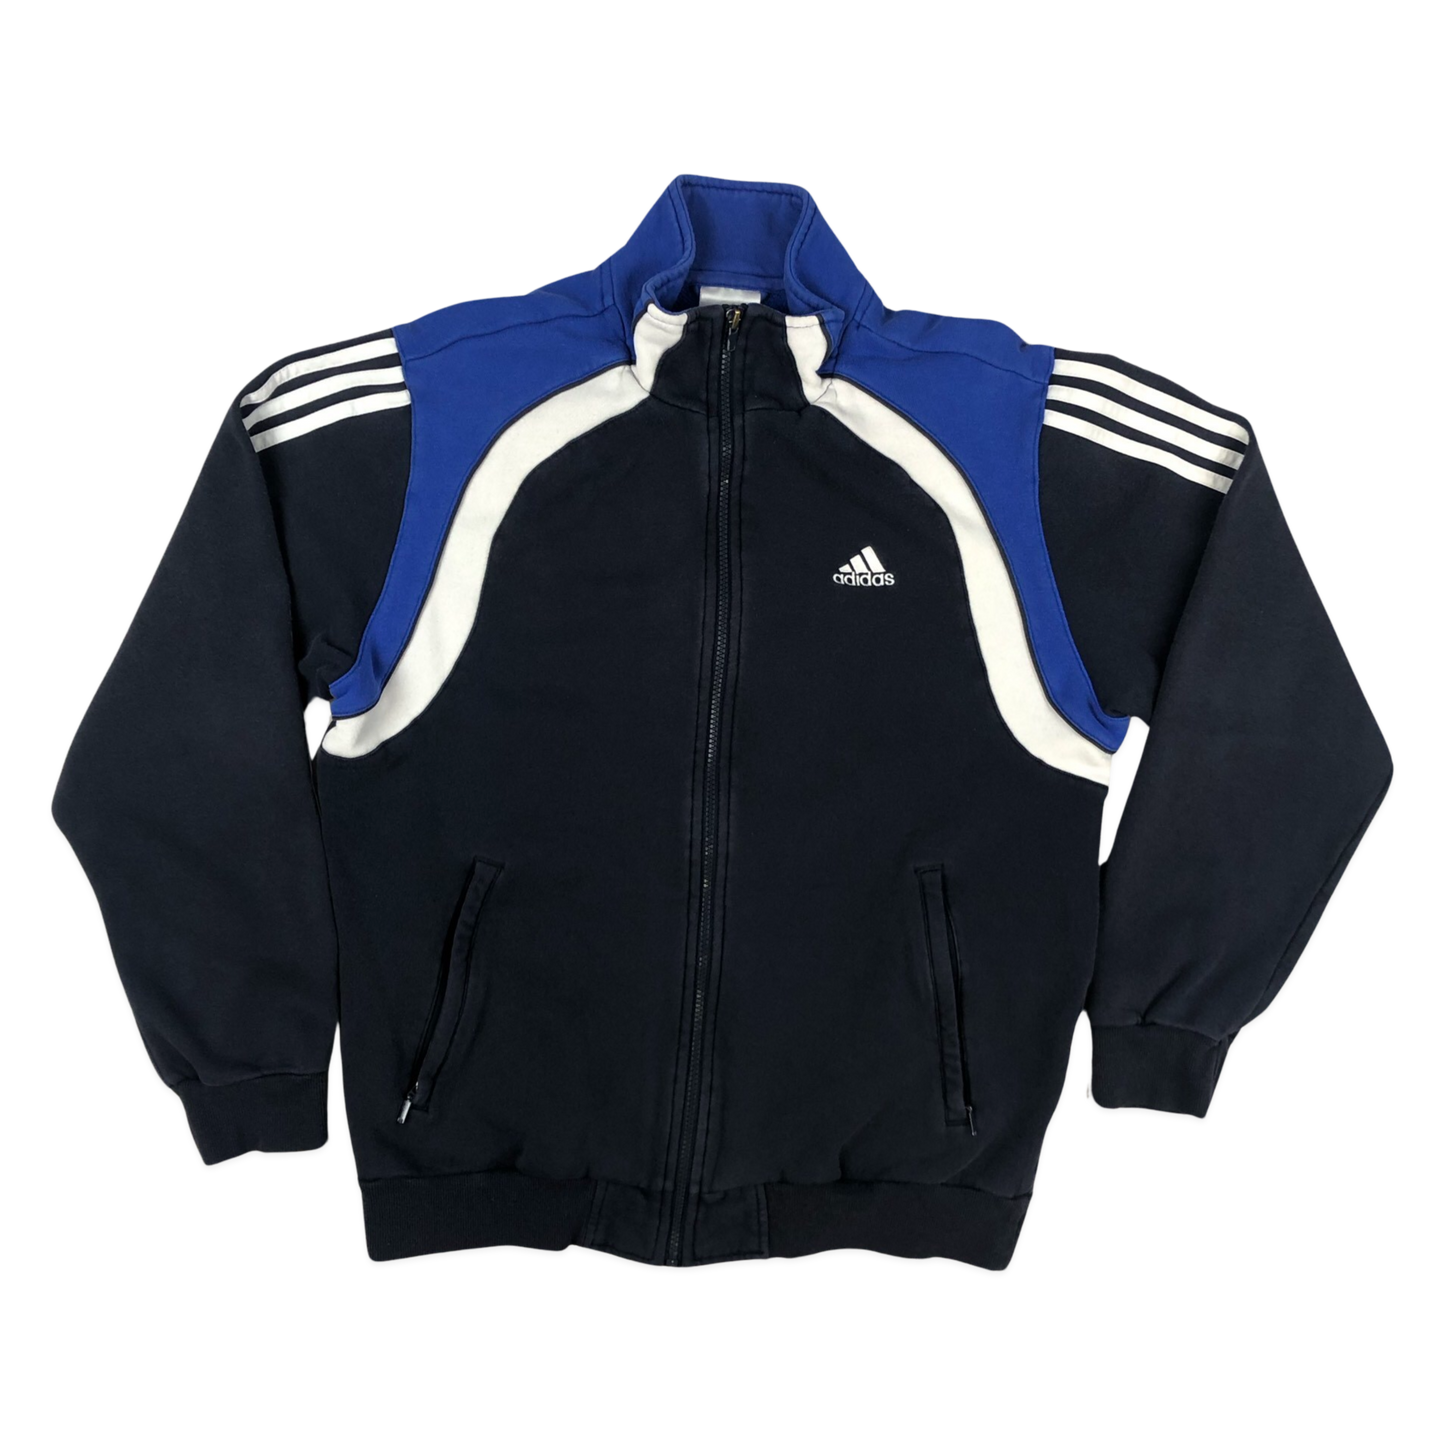 Buy Adidas Ventex Full Zip Track Jacket Vintage 70s Sportswear Navy Blue  VTG Online in India 